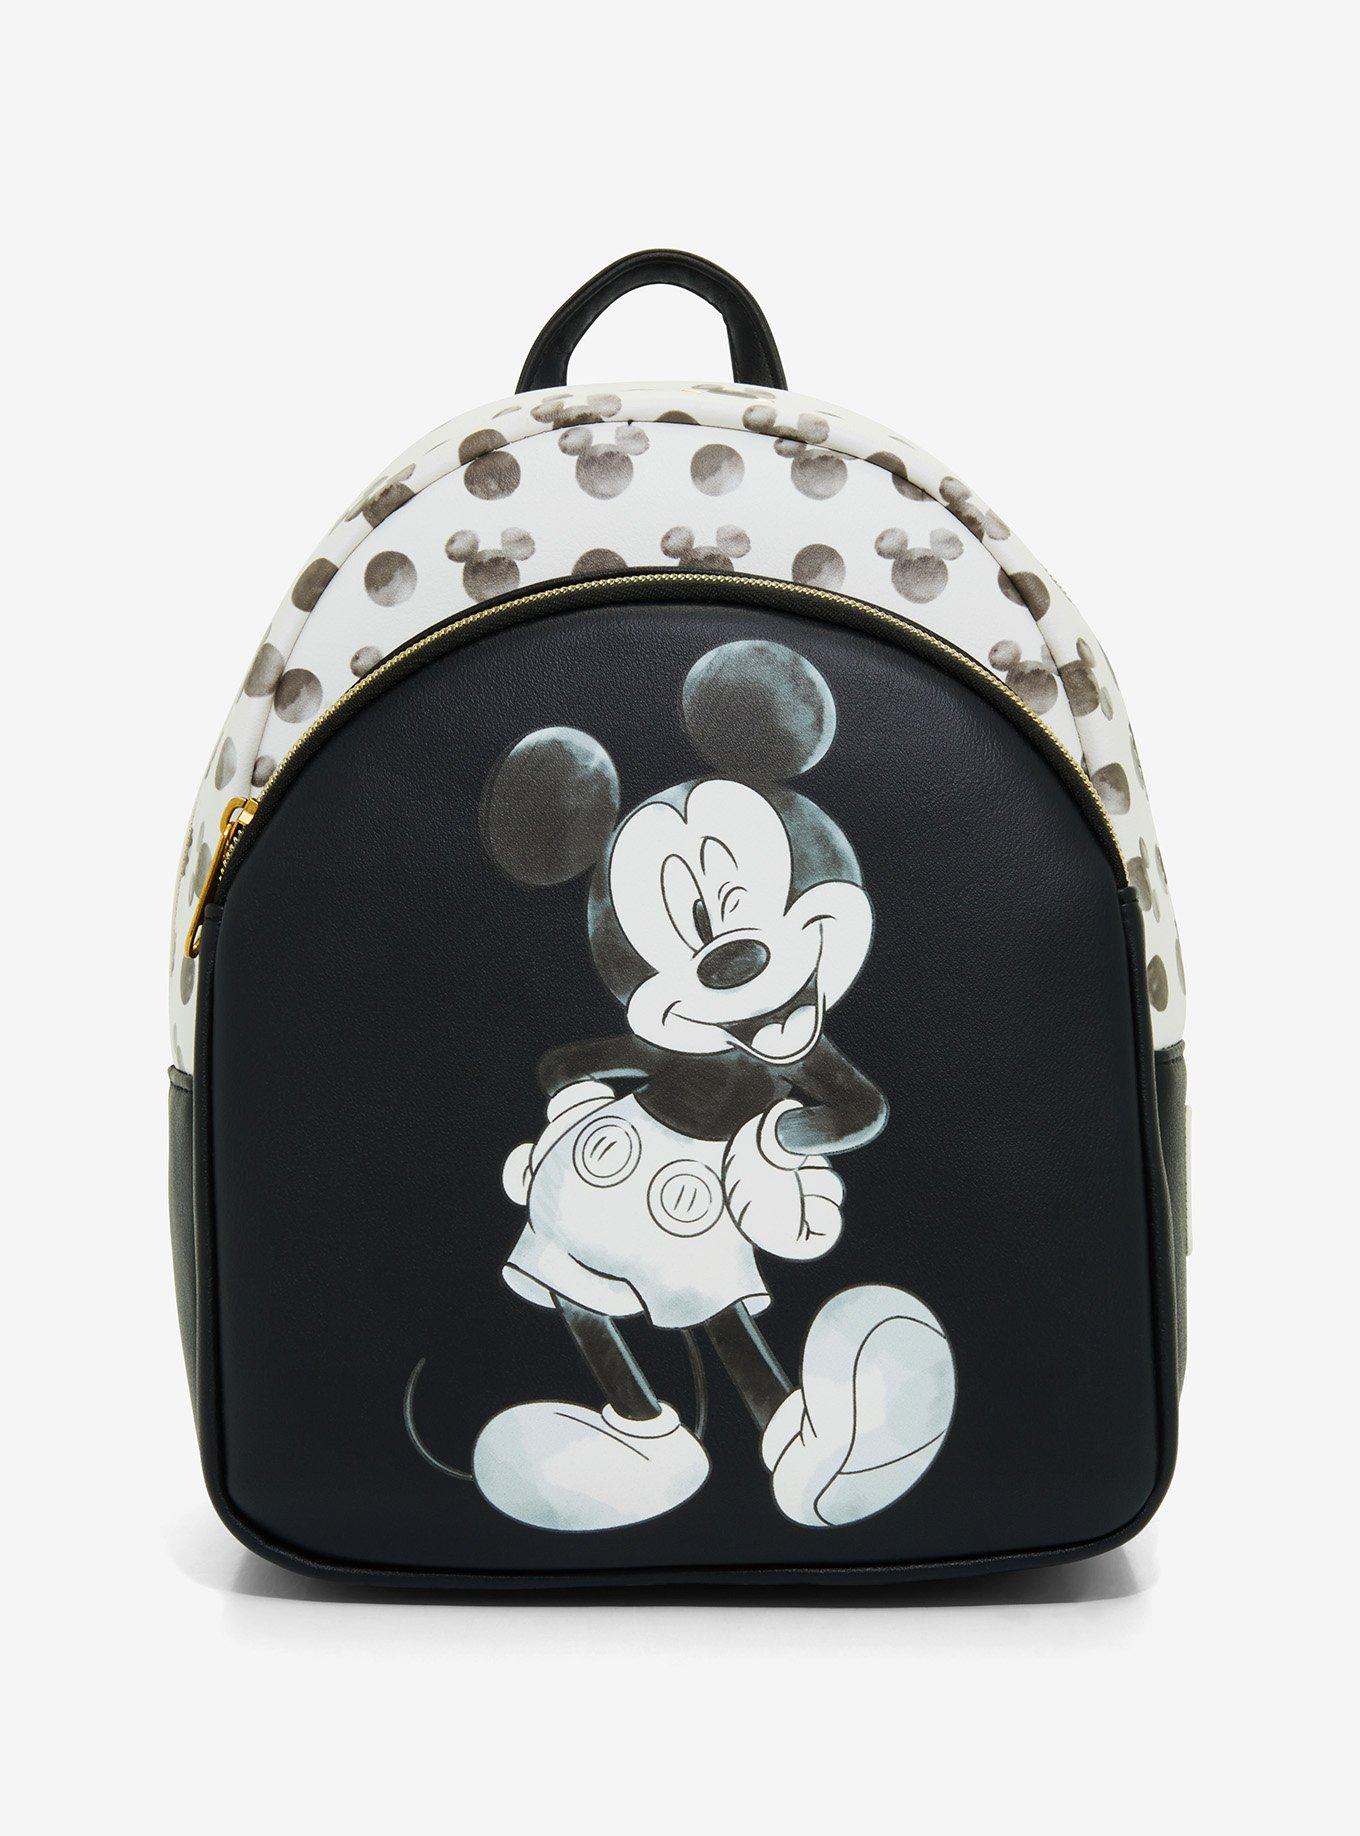 Disney x Coach Maleficent Dragon Backpack - Grey Backpacks, Bags